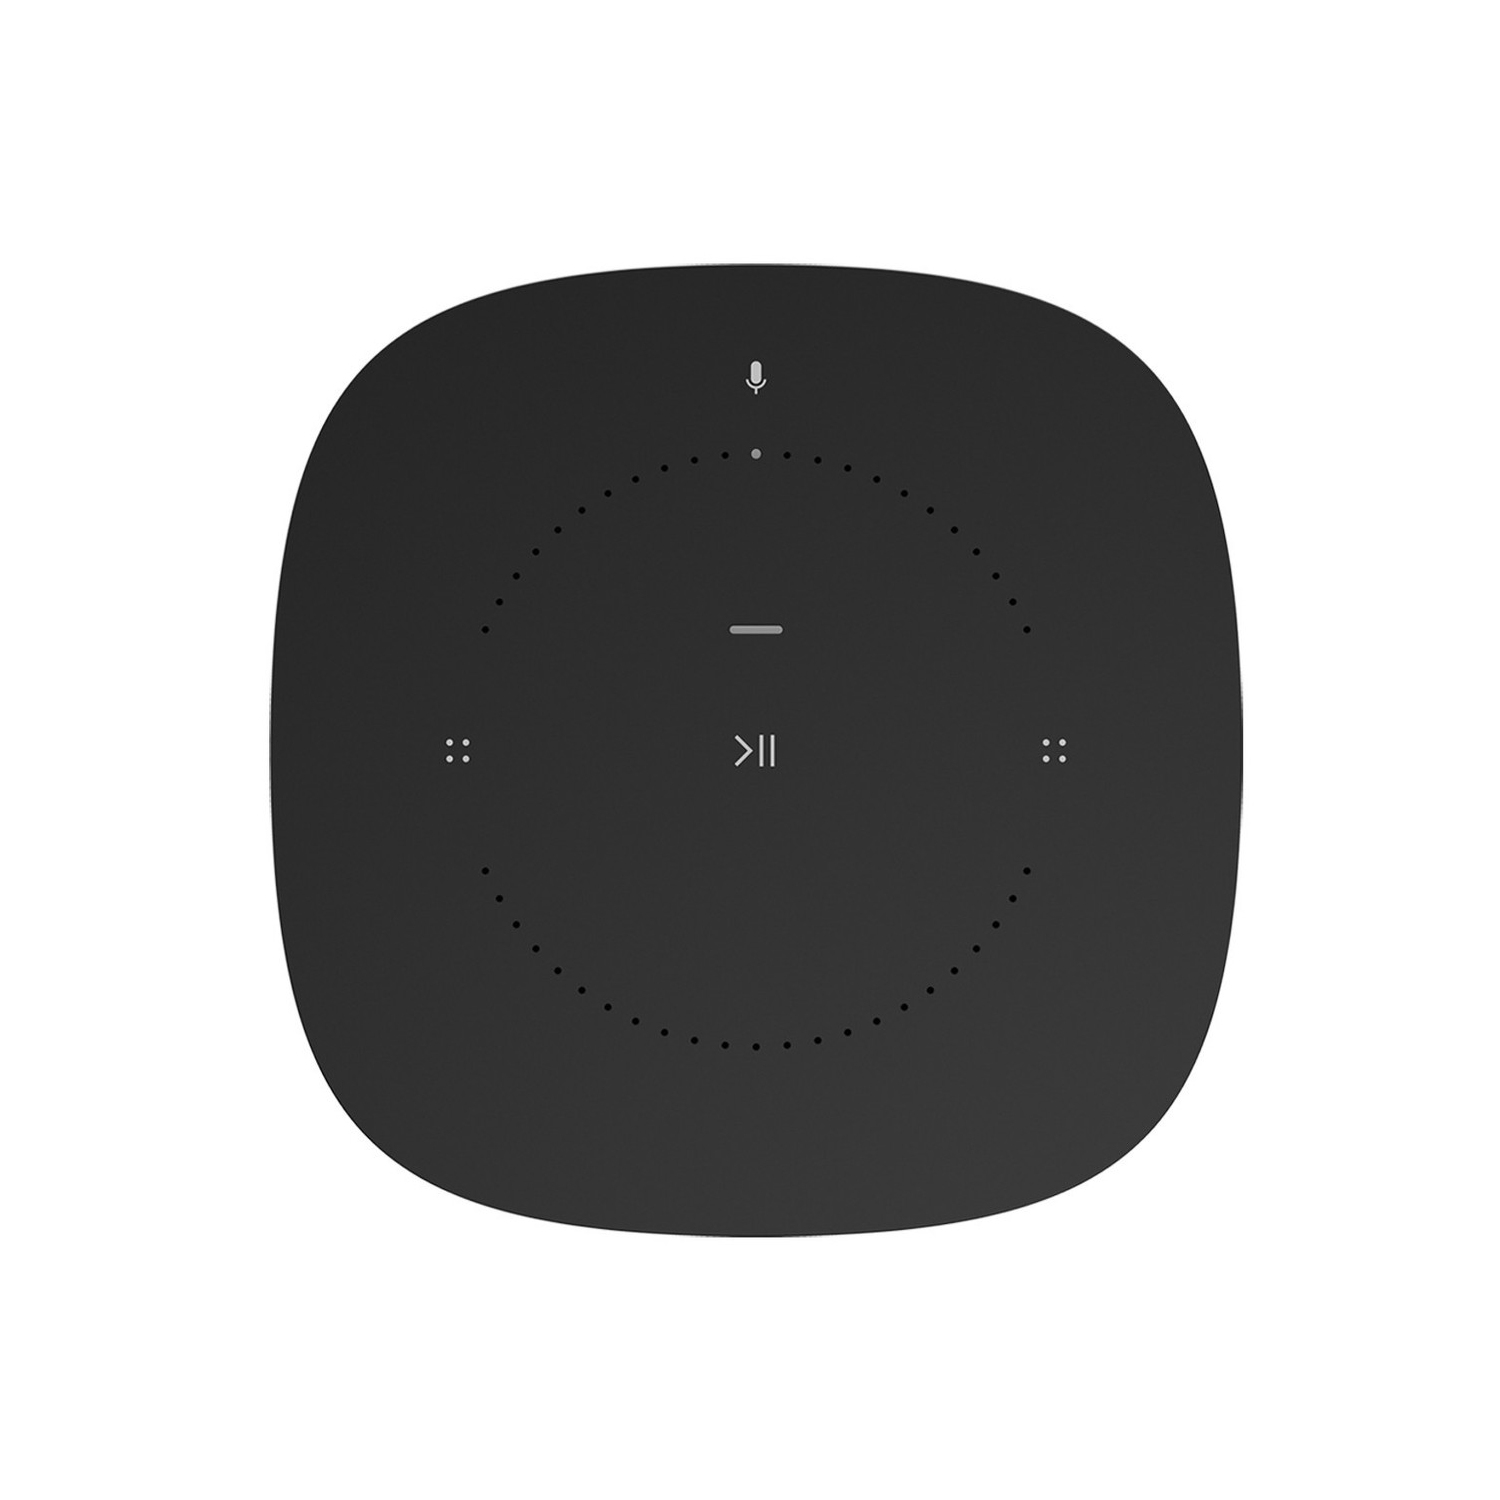 Sonos ONE smart speaker with Google Assist and Amazon Alexa voice control - black - 2